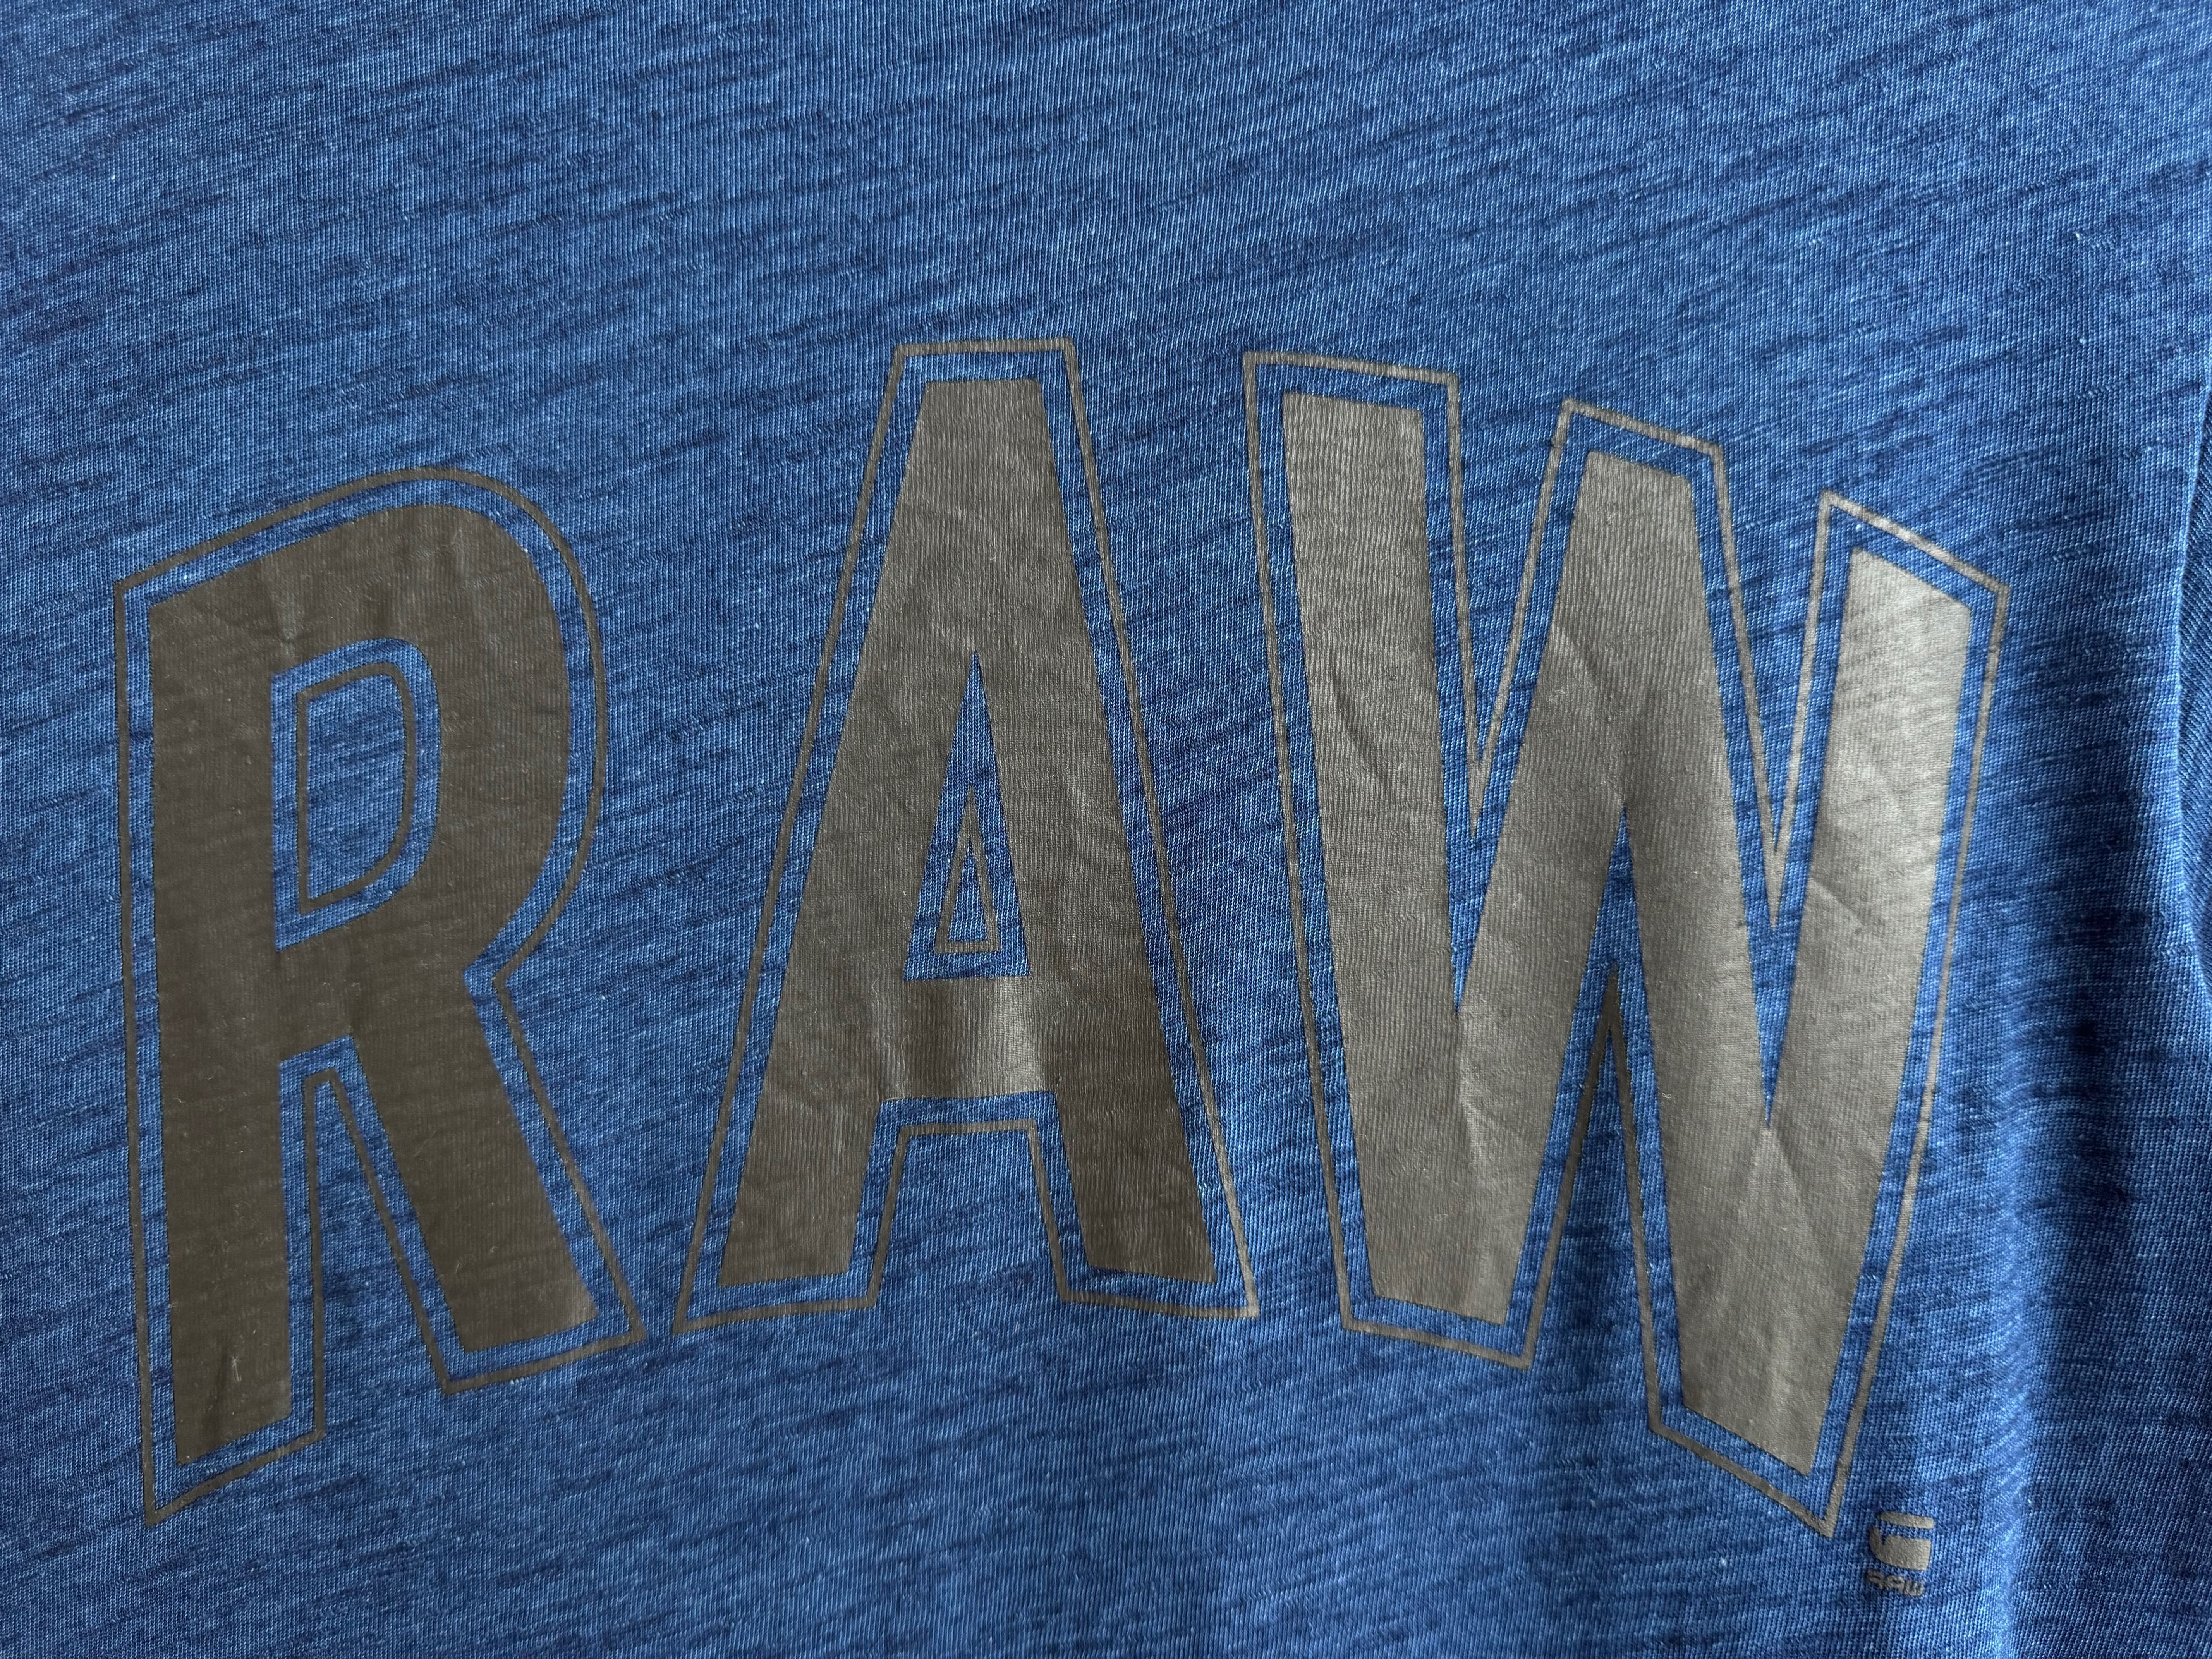 G-Star Raw оригинал мужская футболка размер S Б У